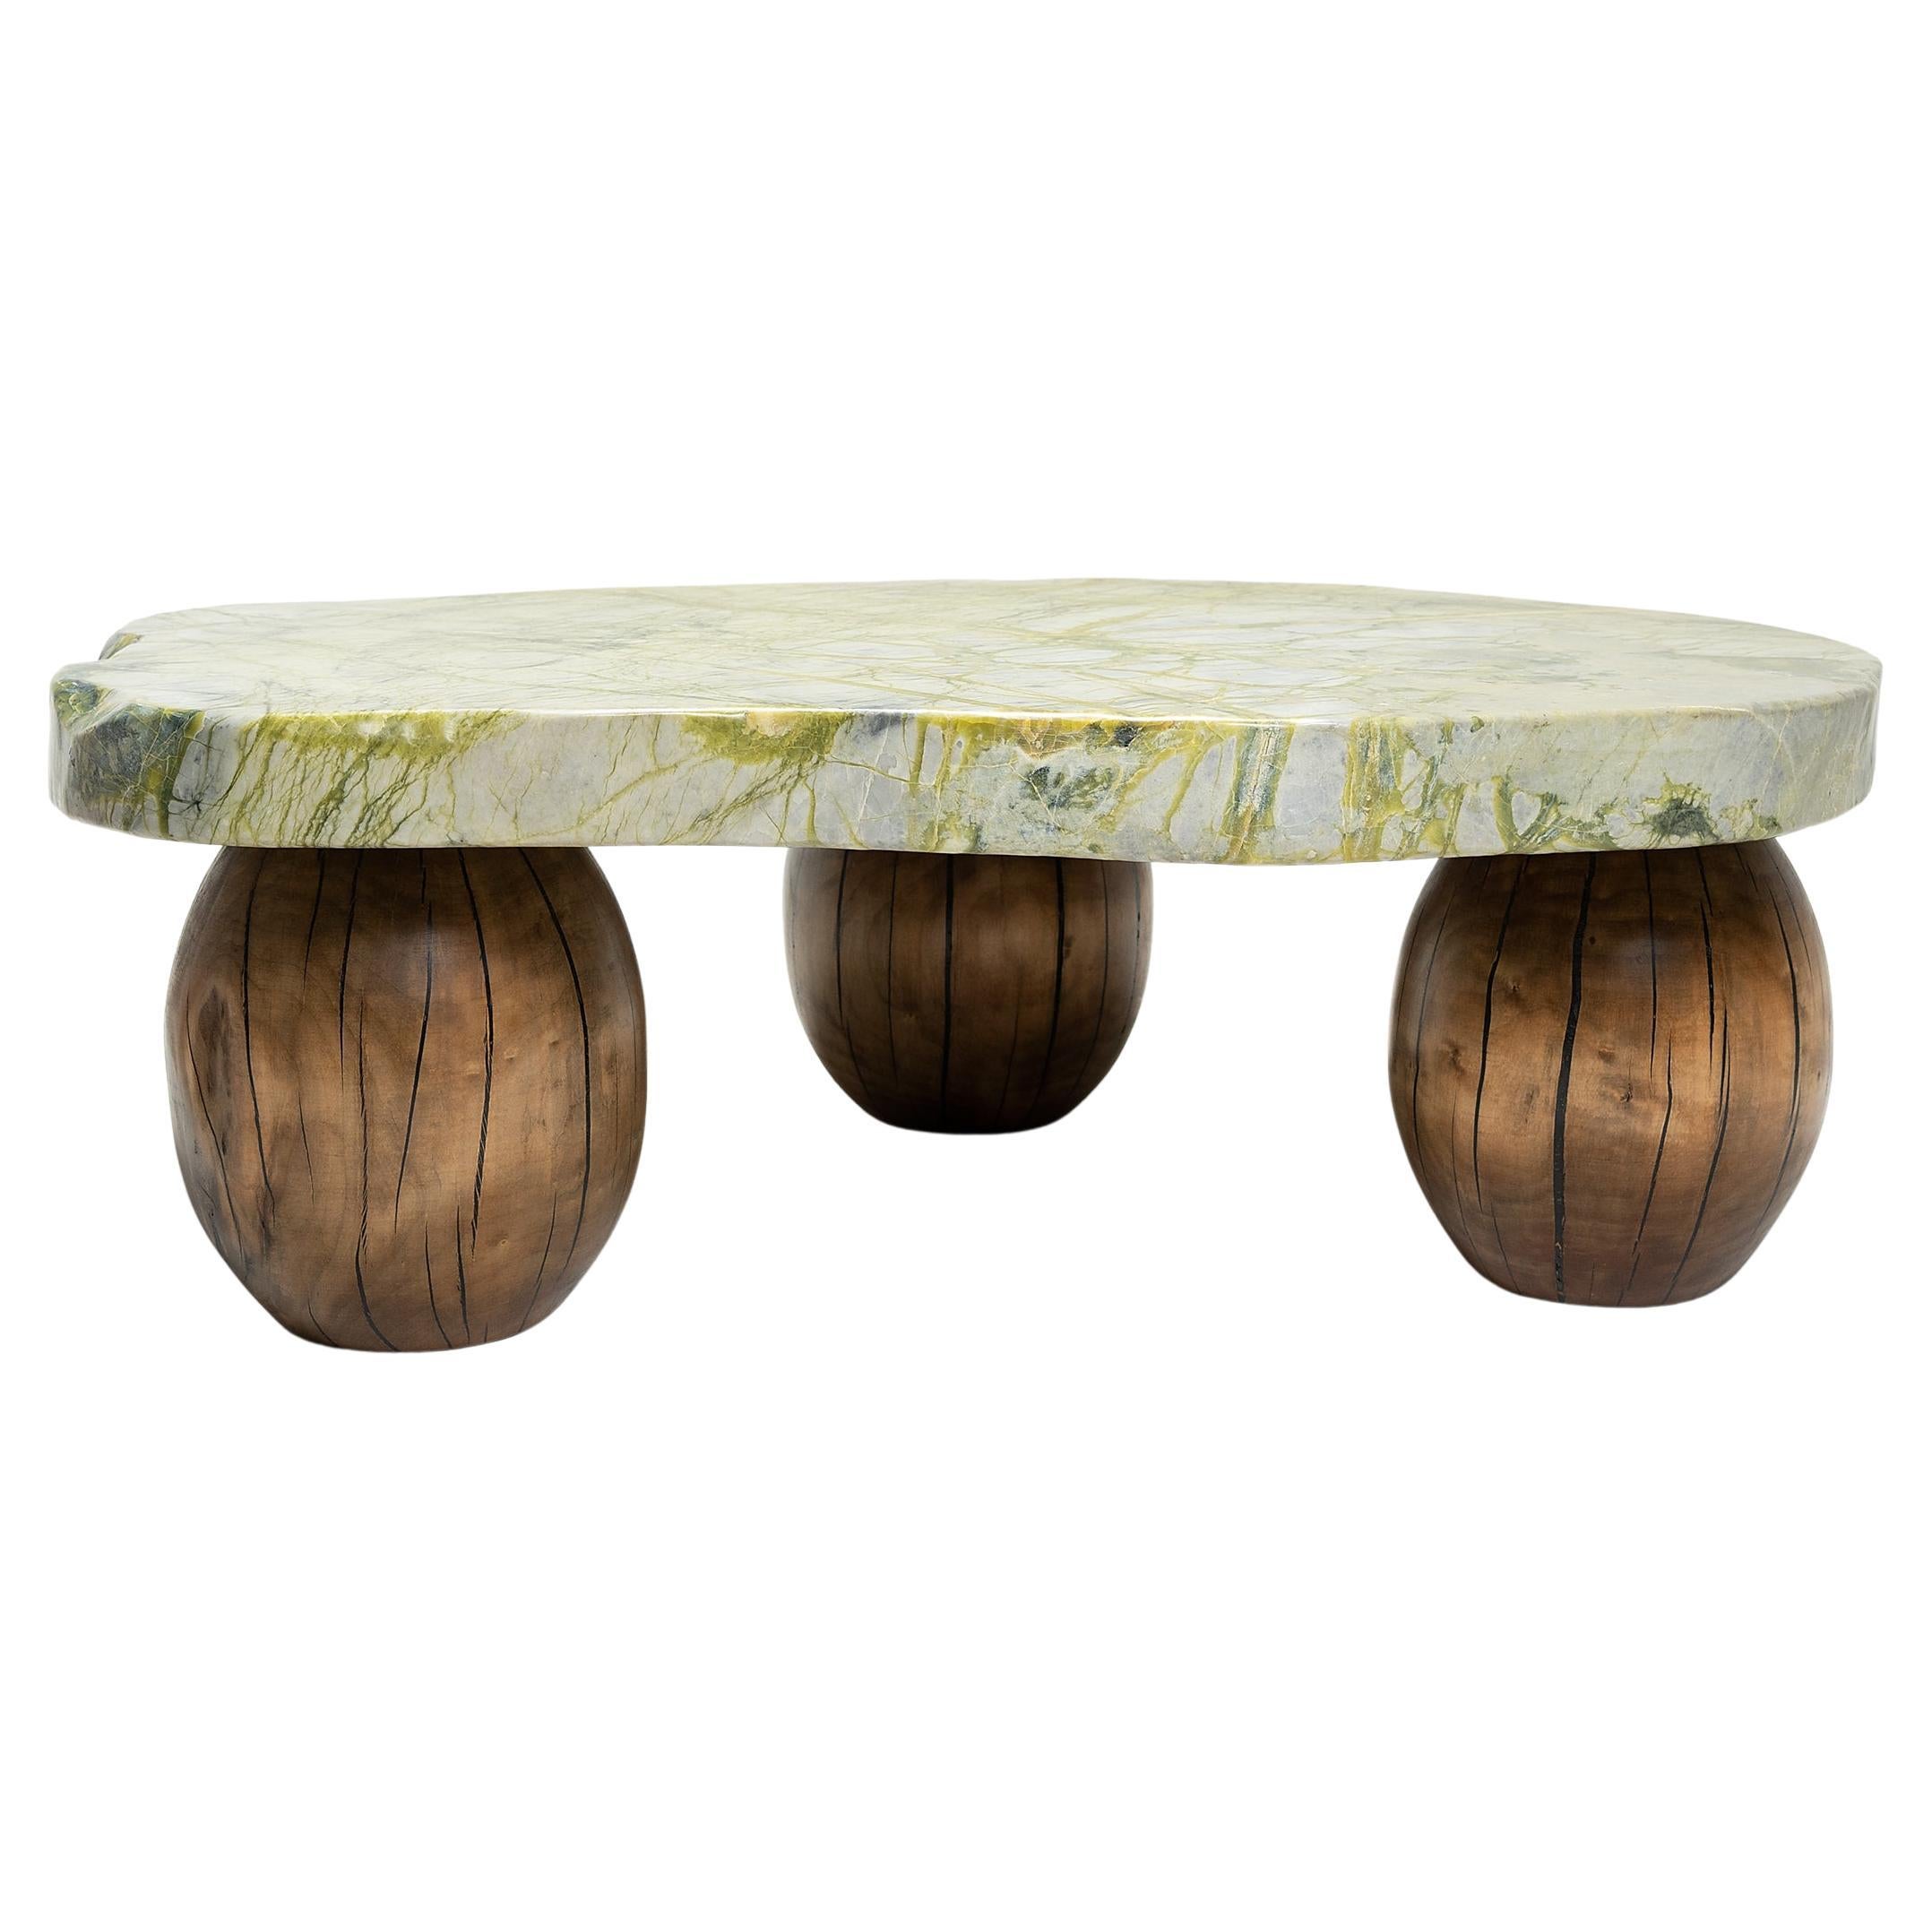 Chinese Greenery Meditation Stone Table